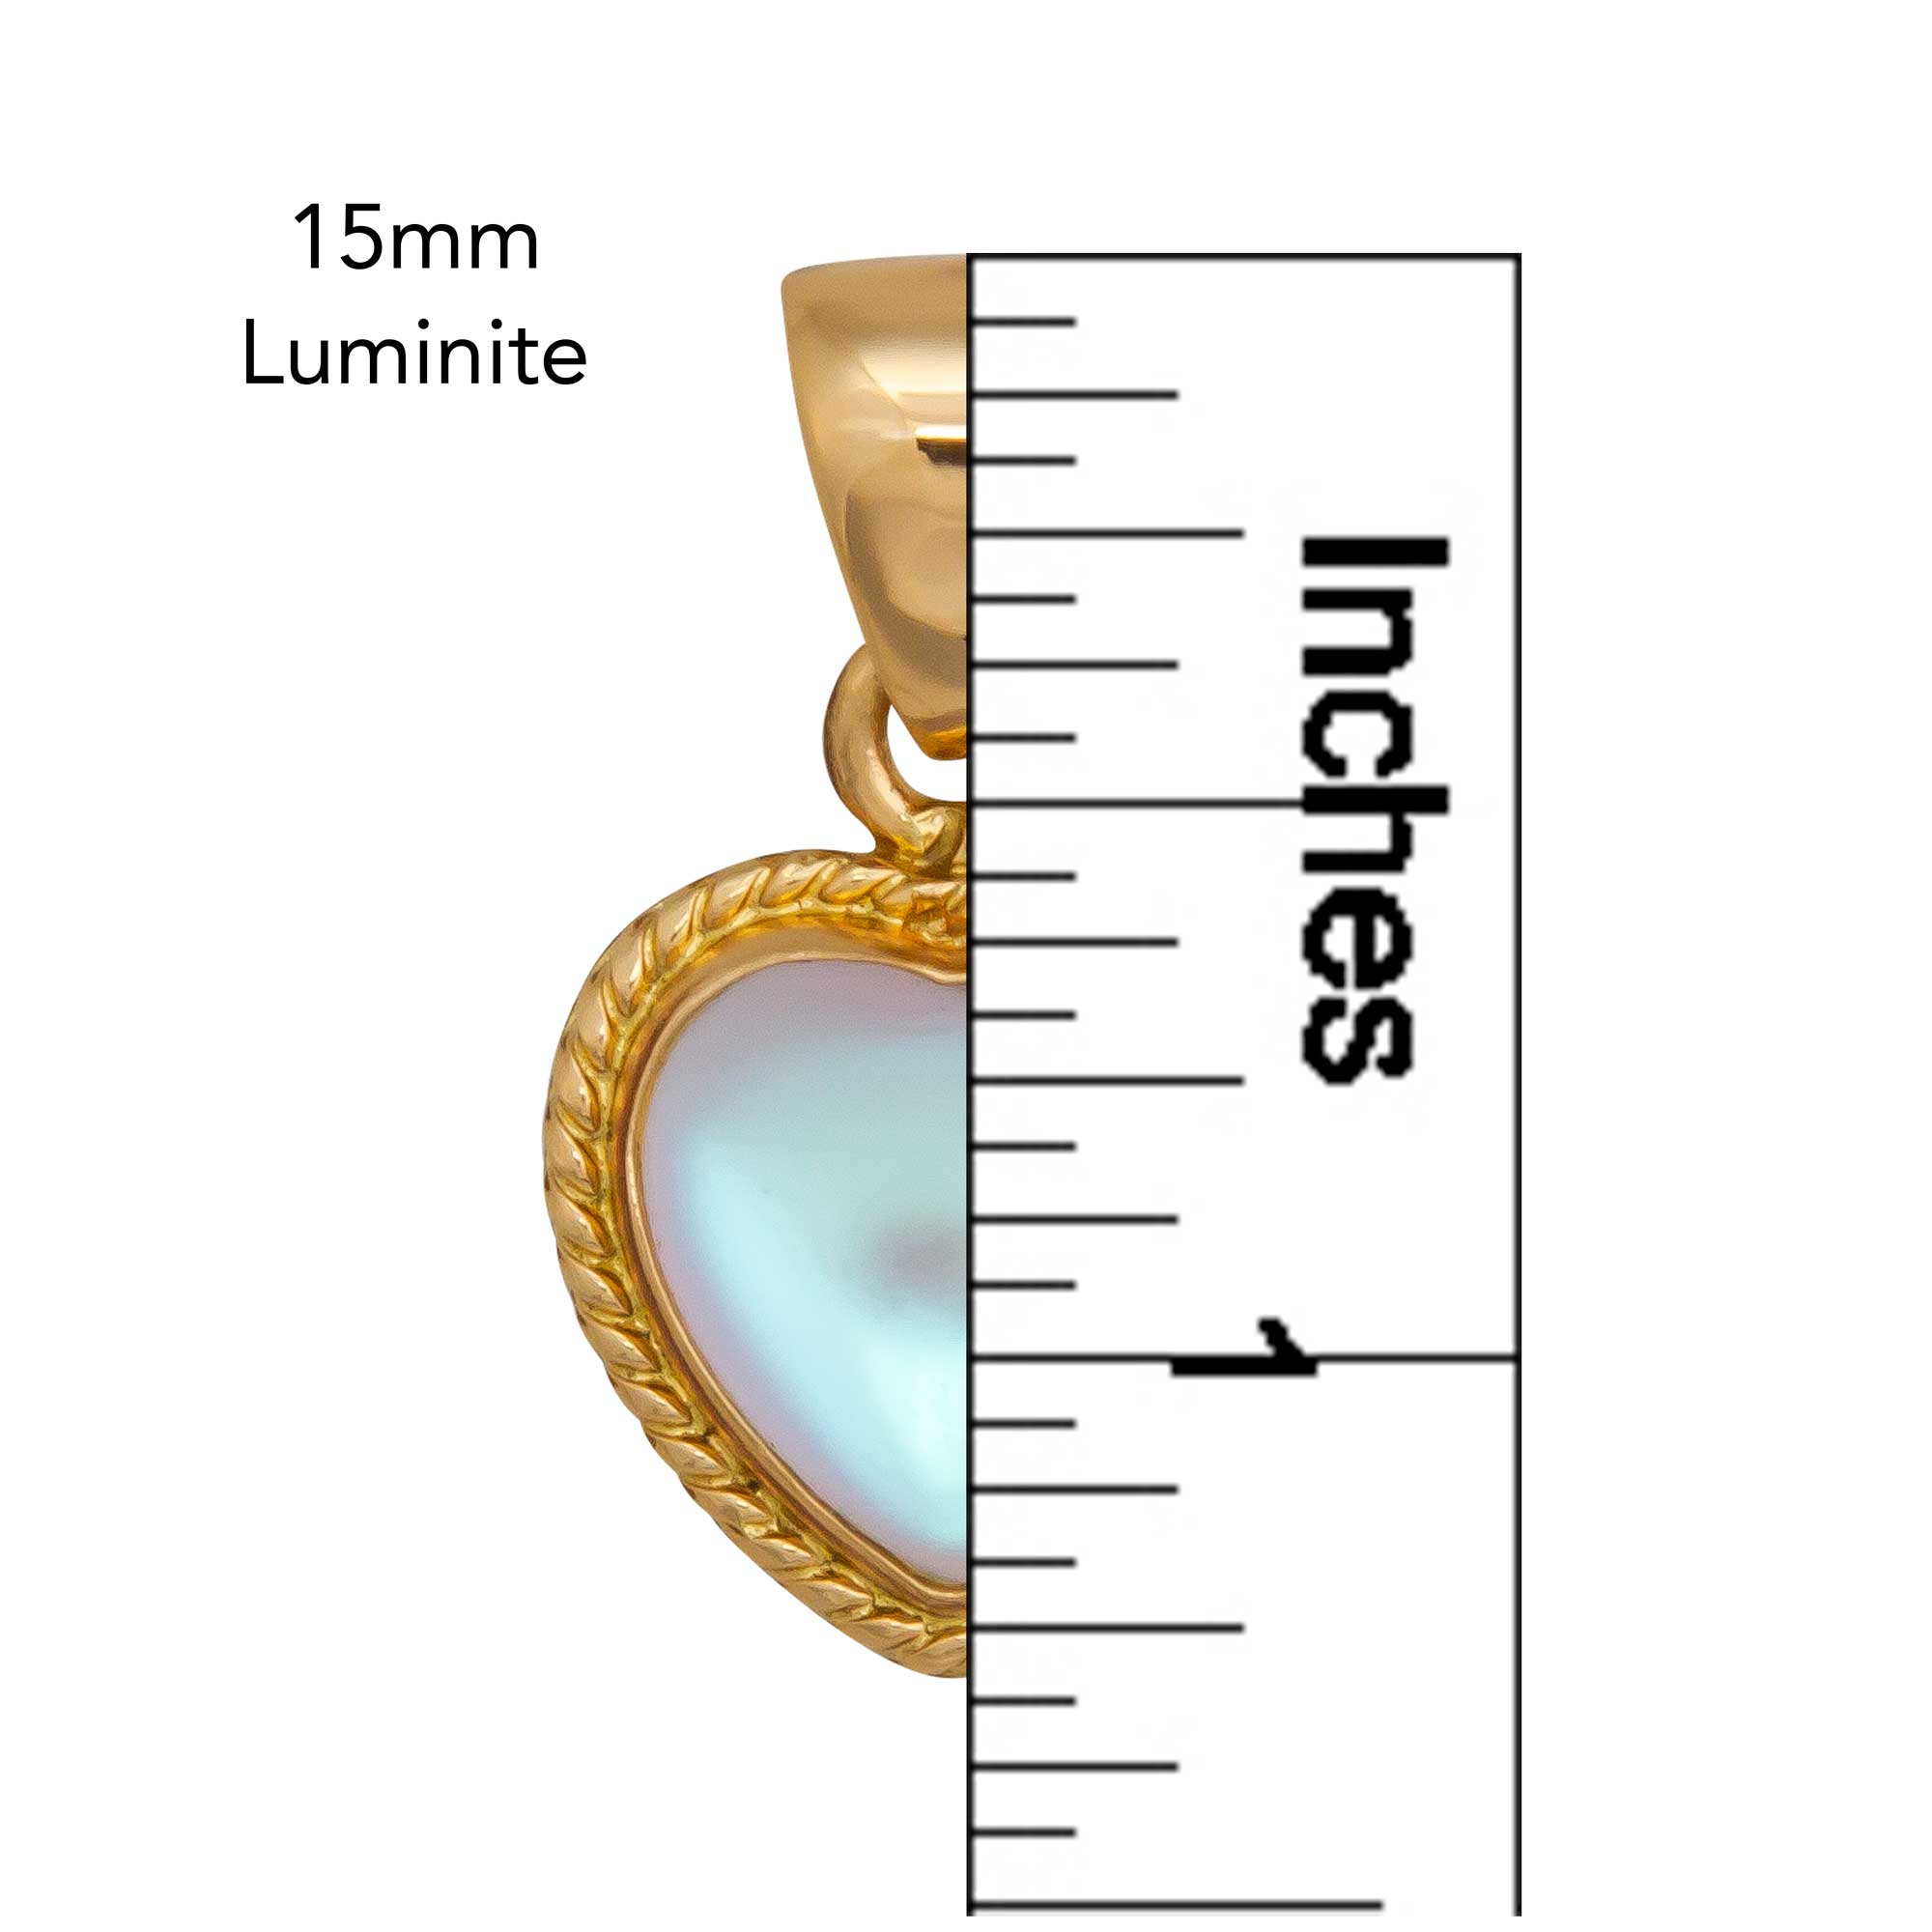 Charles Albert Jewelry - Alchemia Luminite Petite Heart Pendant with Rope Detail - Measurements